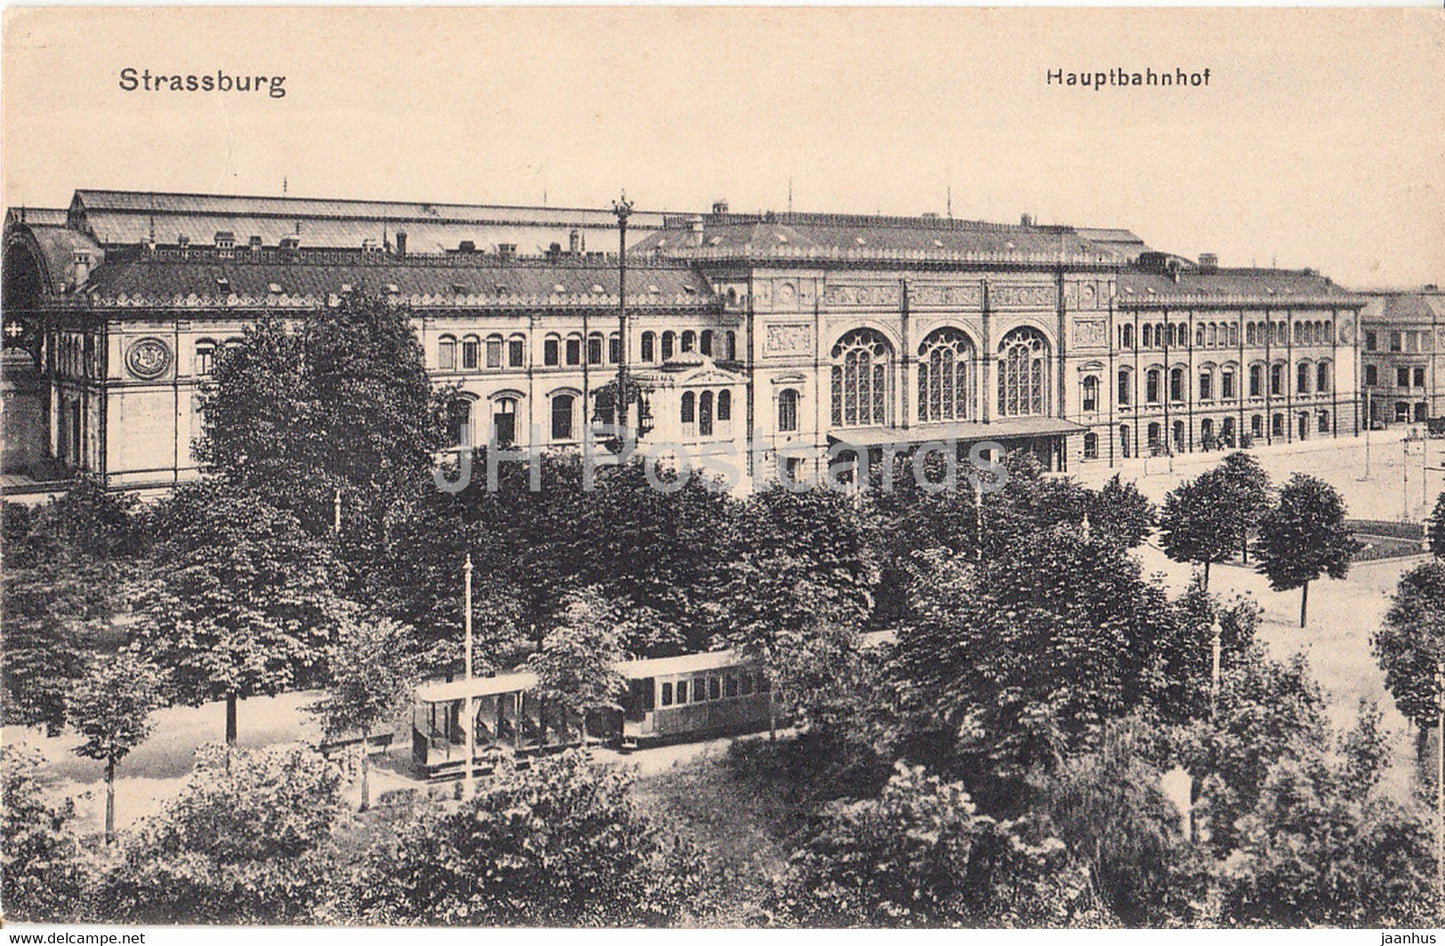 Strassburg - Strasbourg - Hauptbahnhof - railway station - old postcard - France - unused - JH Postcards